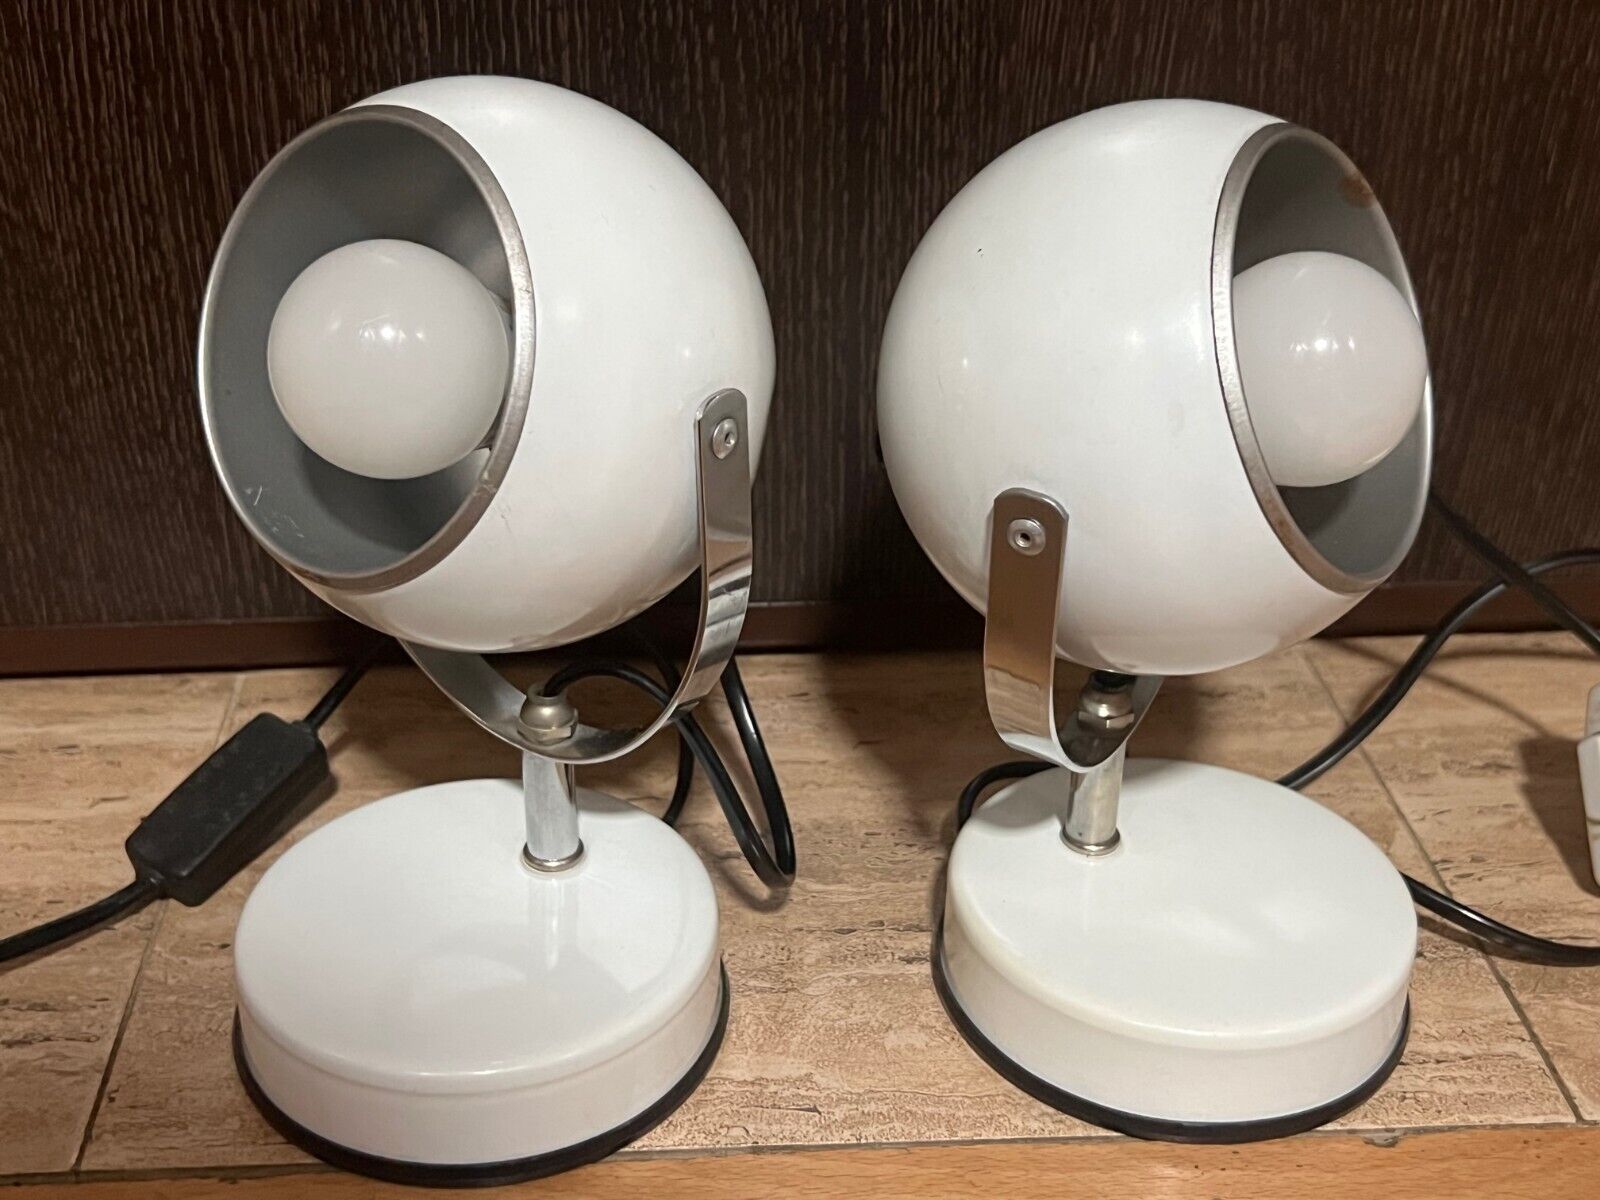 1970s Pair Of White Eyeball Table Lamps By Veneta Lumi. Made In Italy